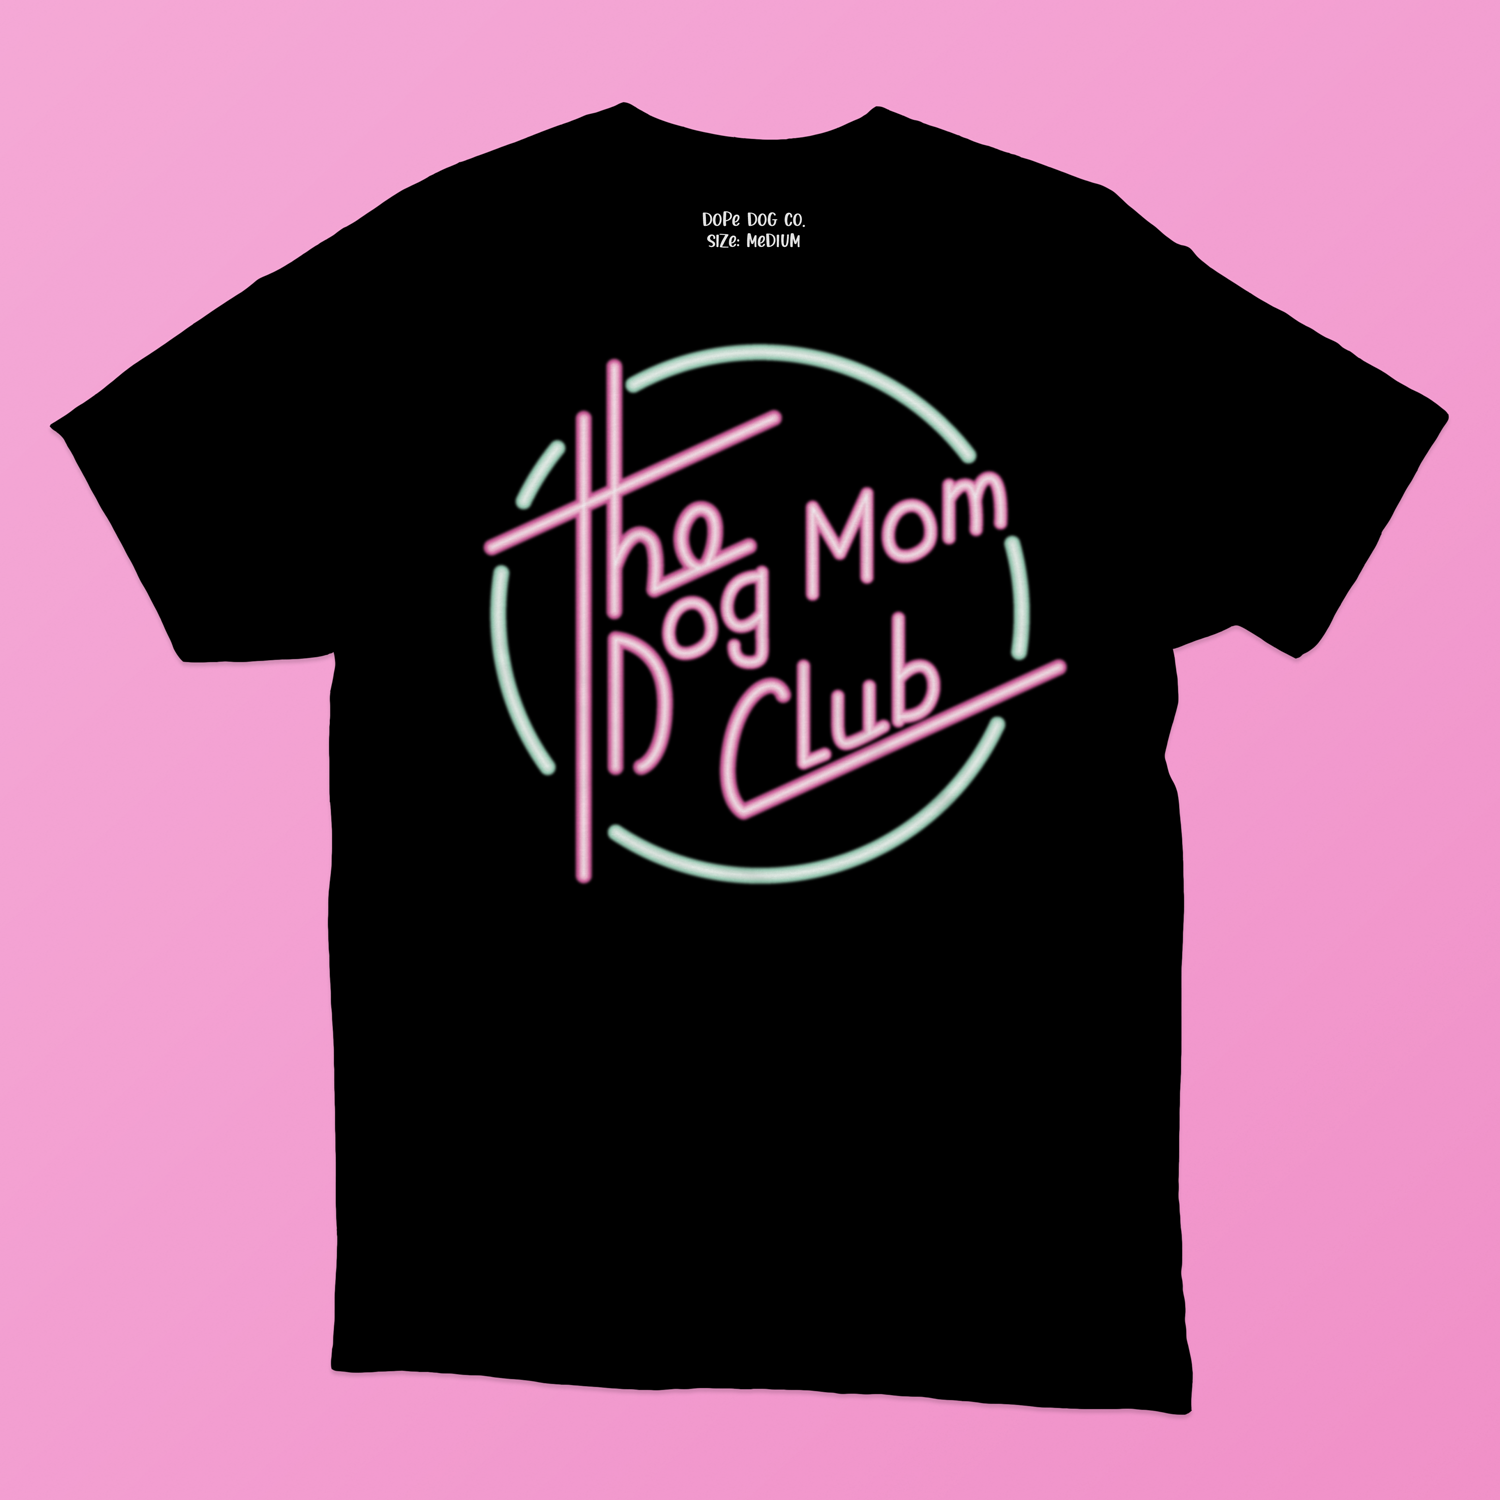 Dog Mom Club Tee